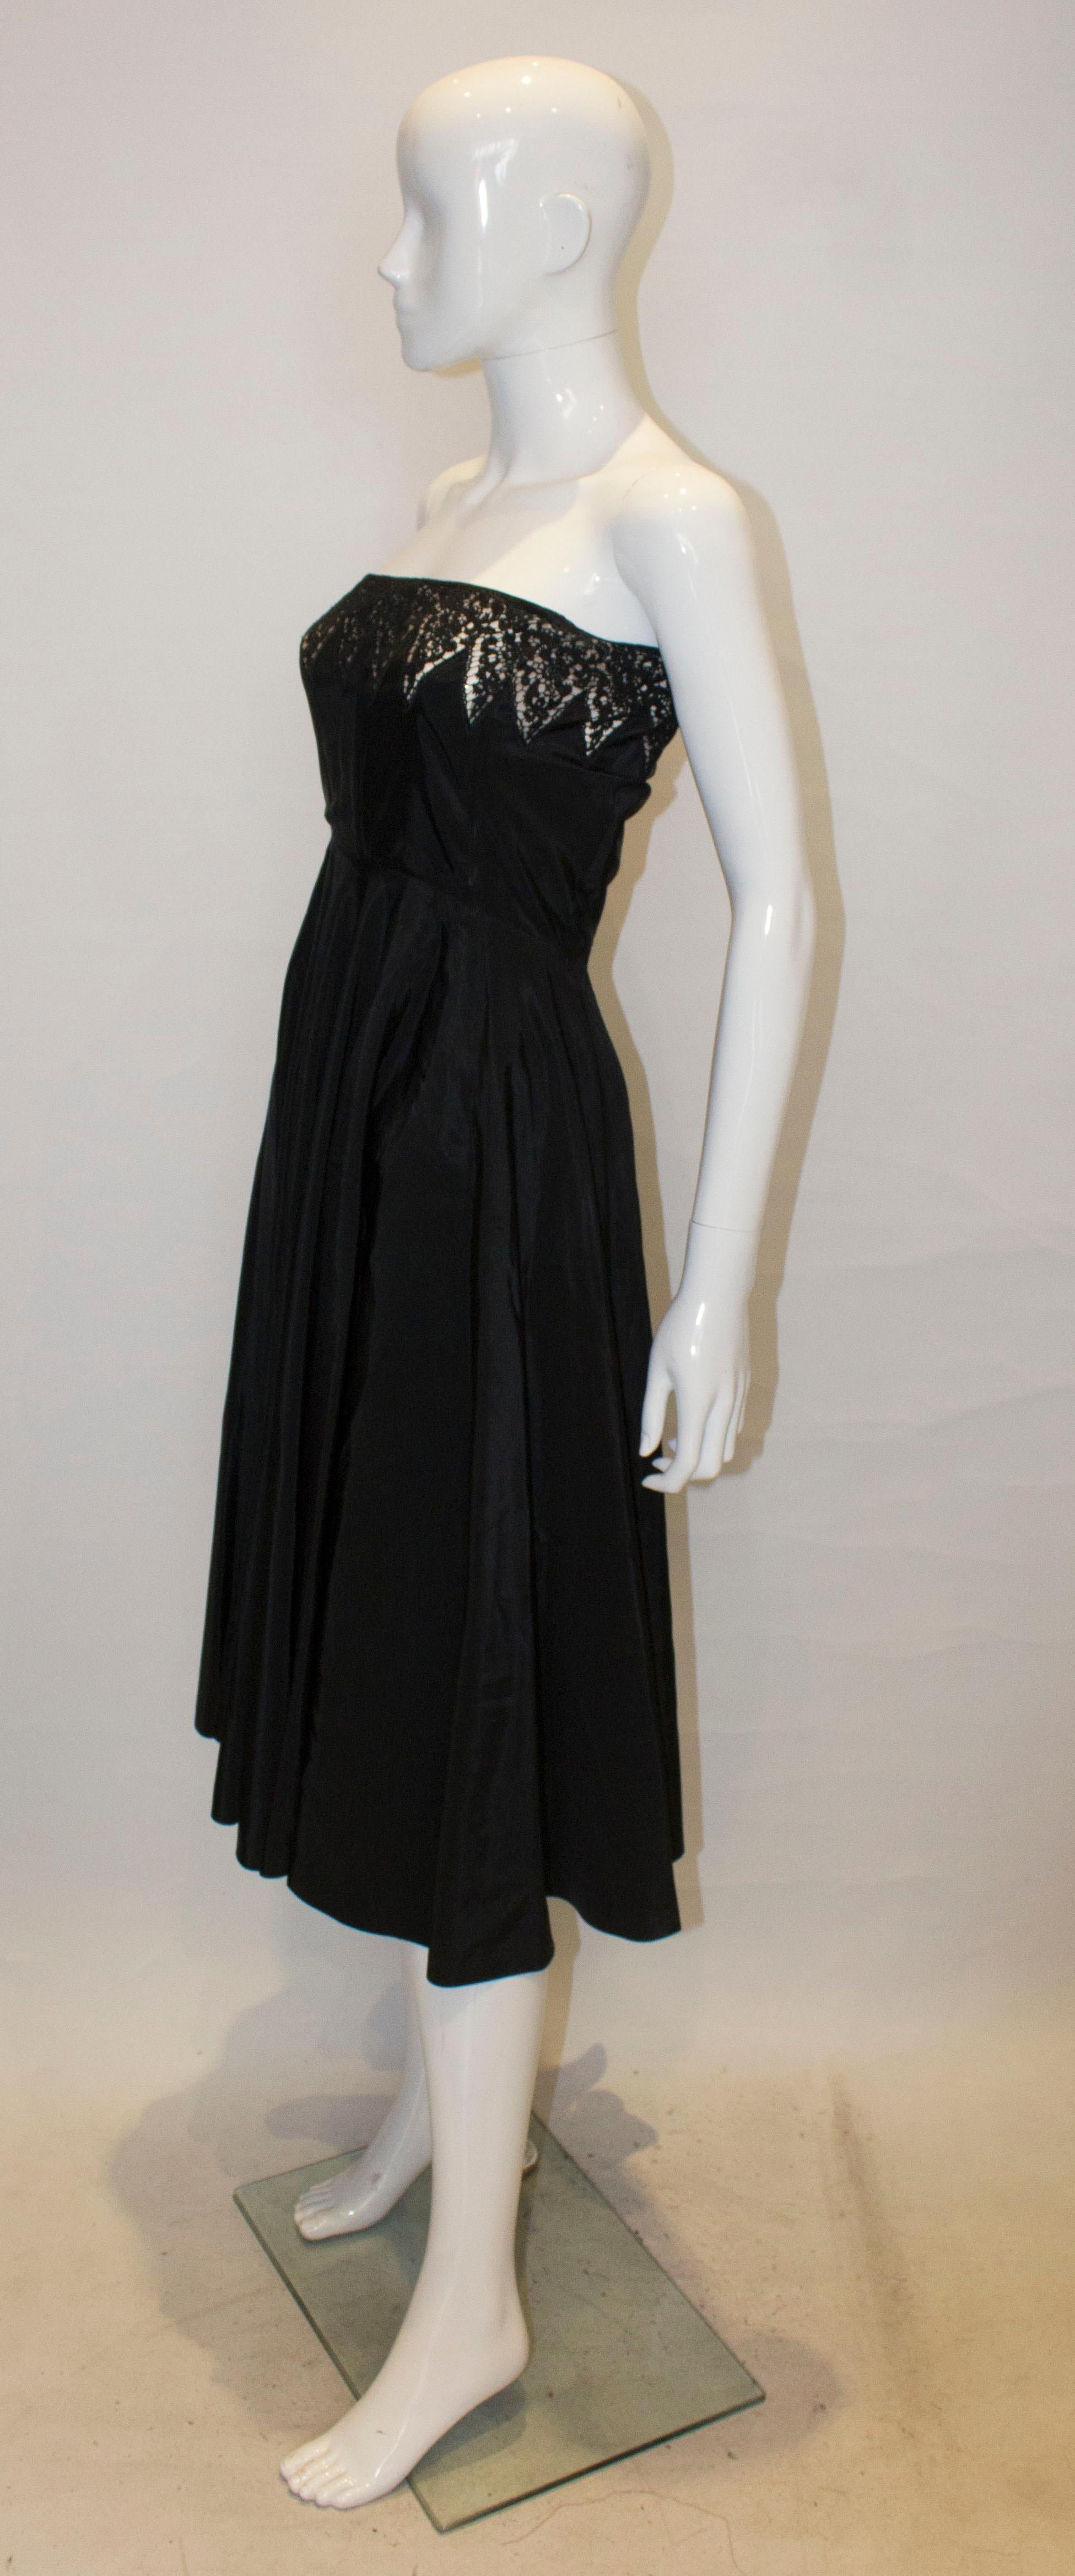 Women's Black Vintage 1950s Cocktail Dress For Sale